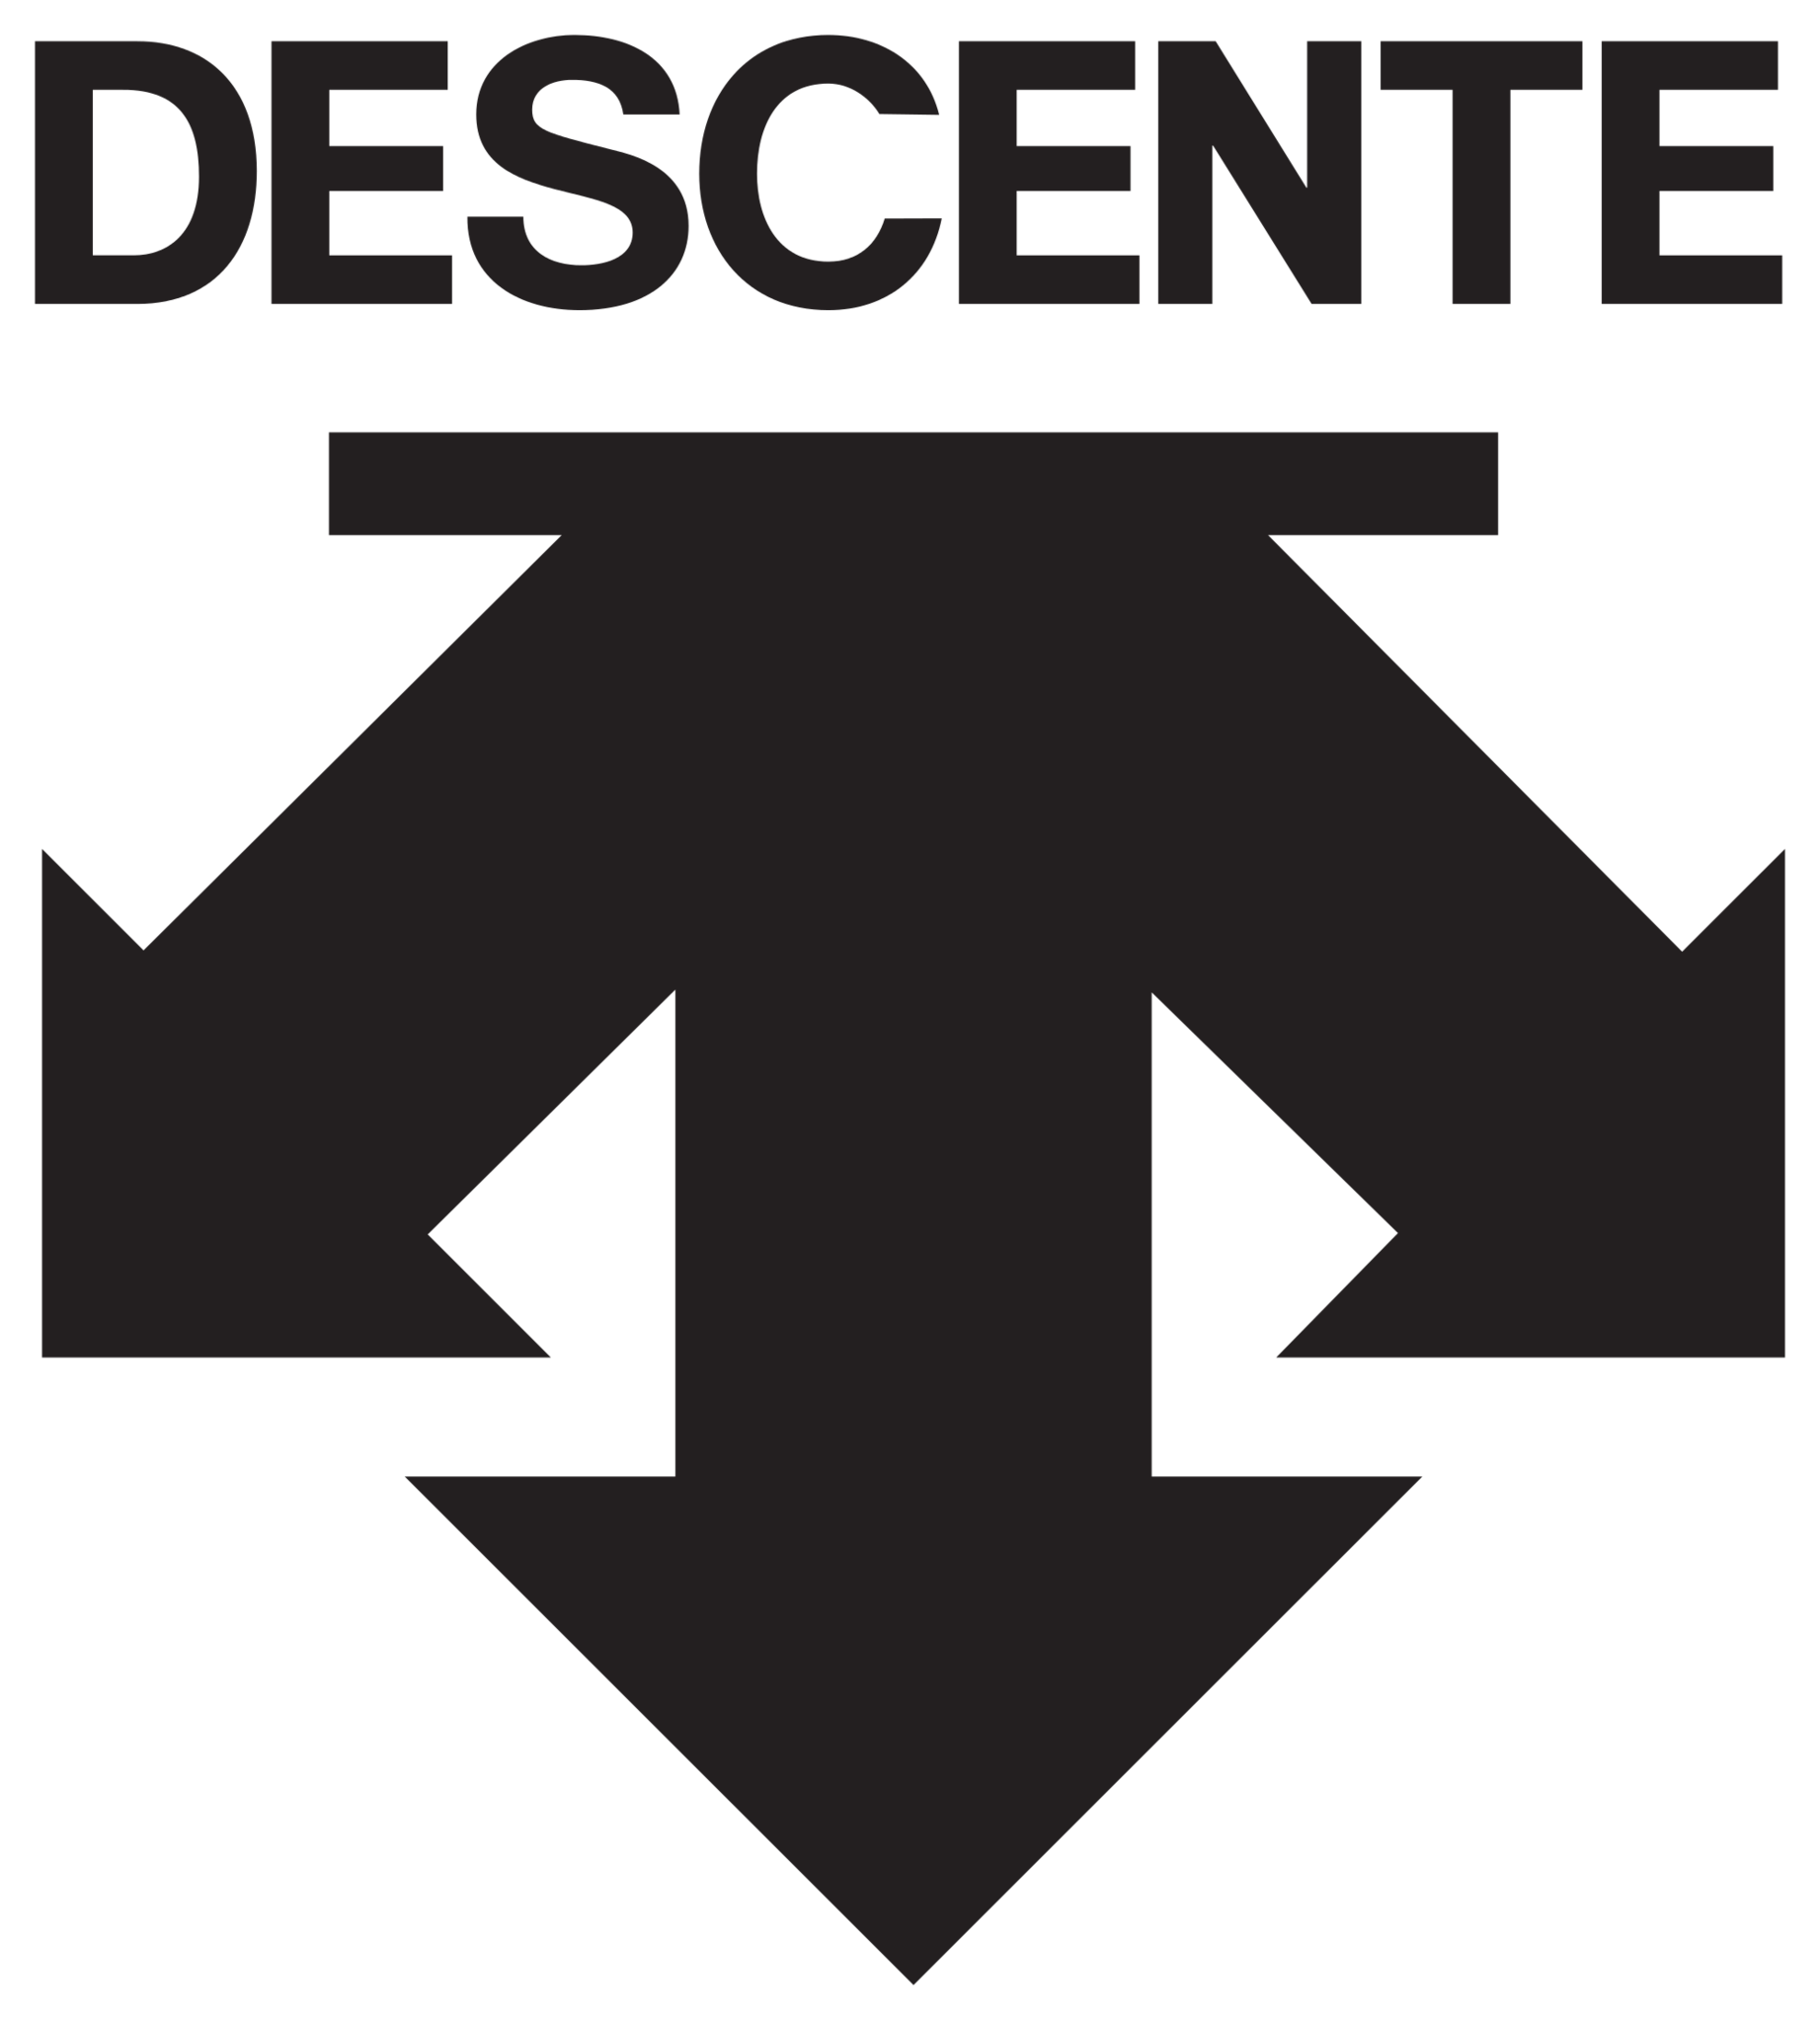 Descente